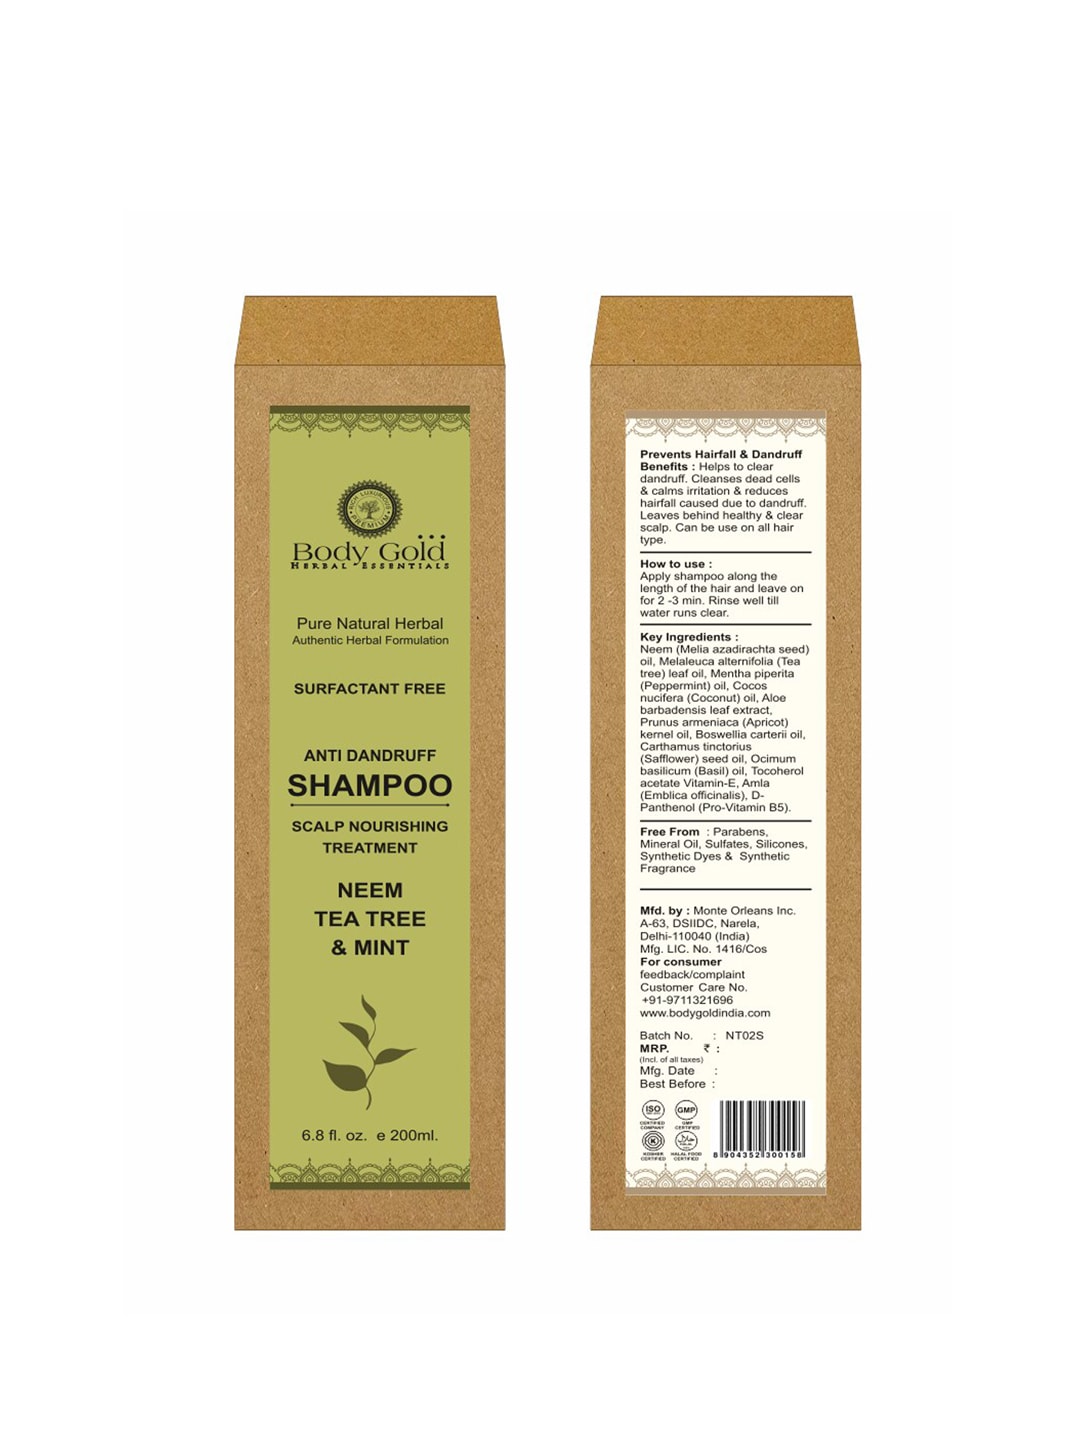 Body Gold Neem, Tea Tree & Mint Hair Shampoo 200 ml Price in India